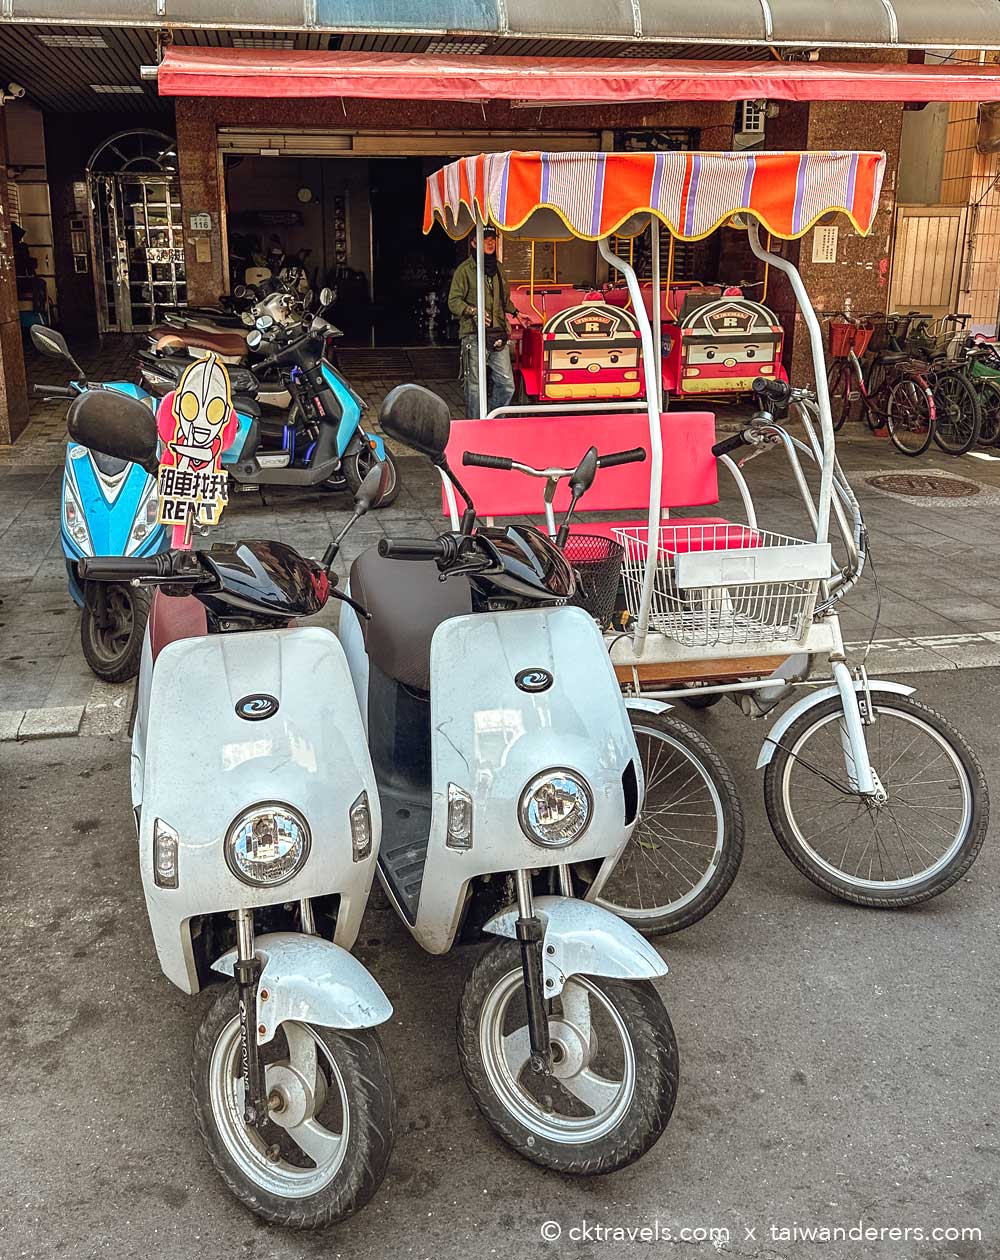 cyclo bikes / moped rental places Cijin Island